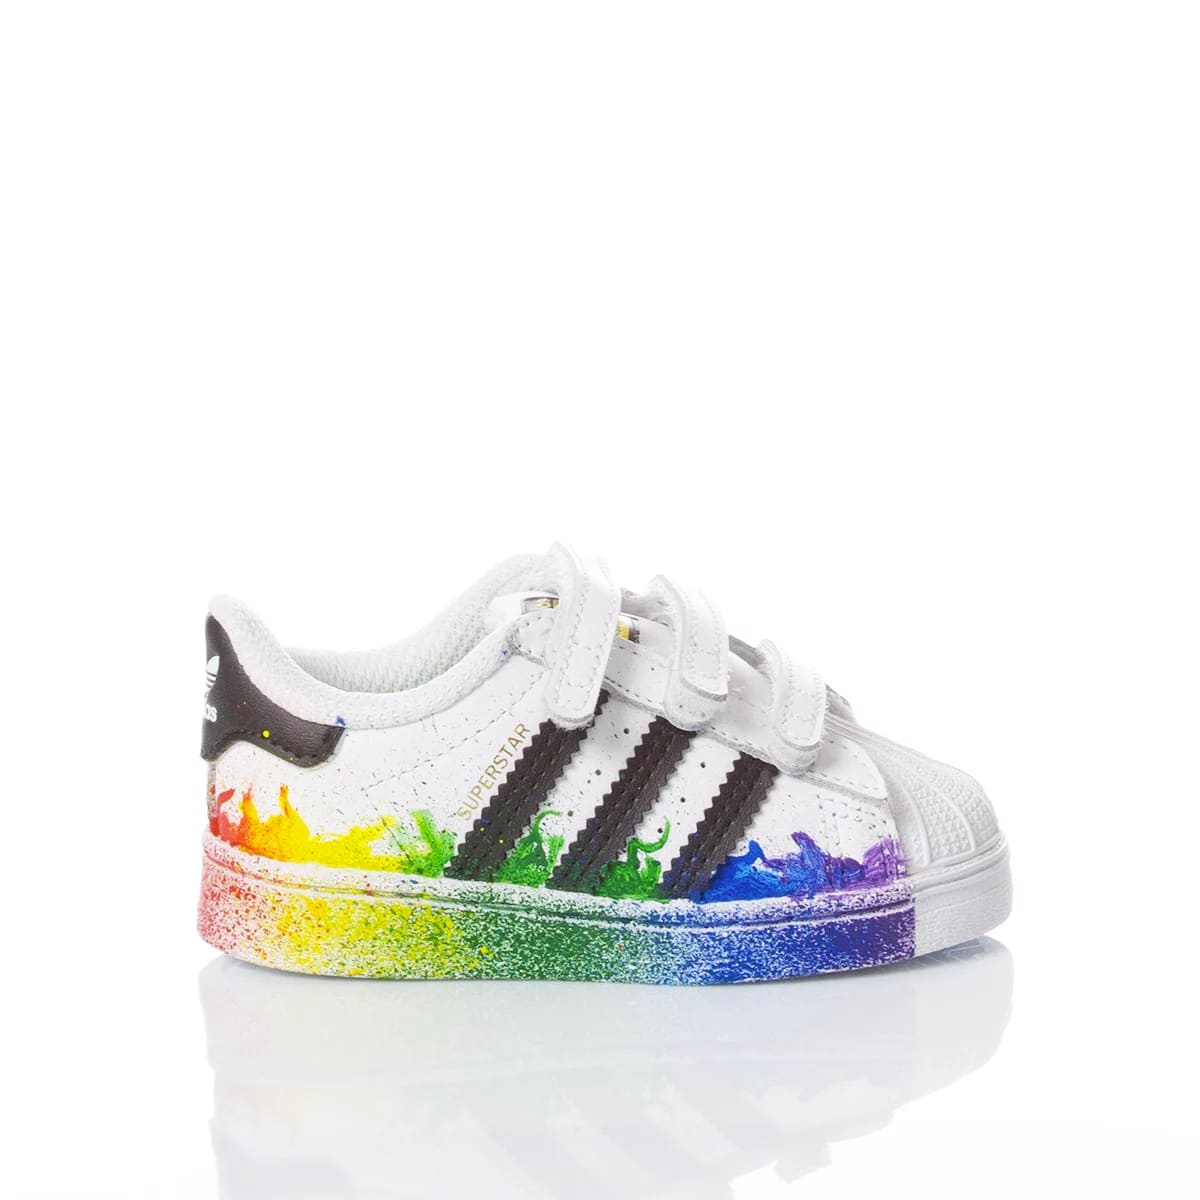 Shop Mimanera Adidas Baby: Customize Your Little Shoe!